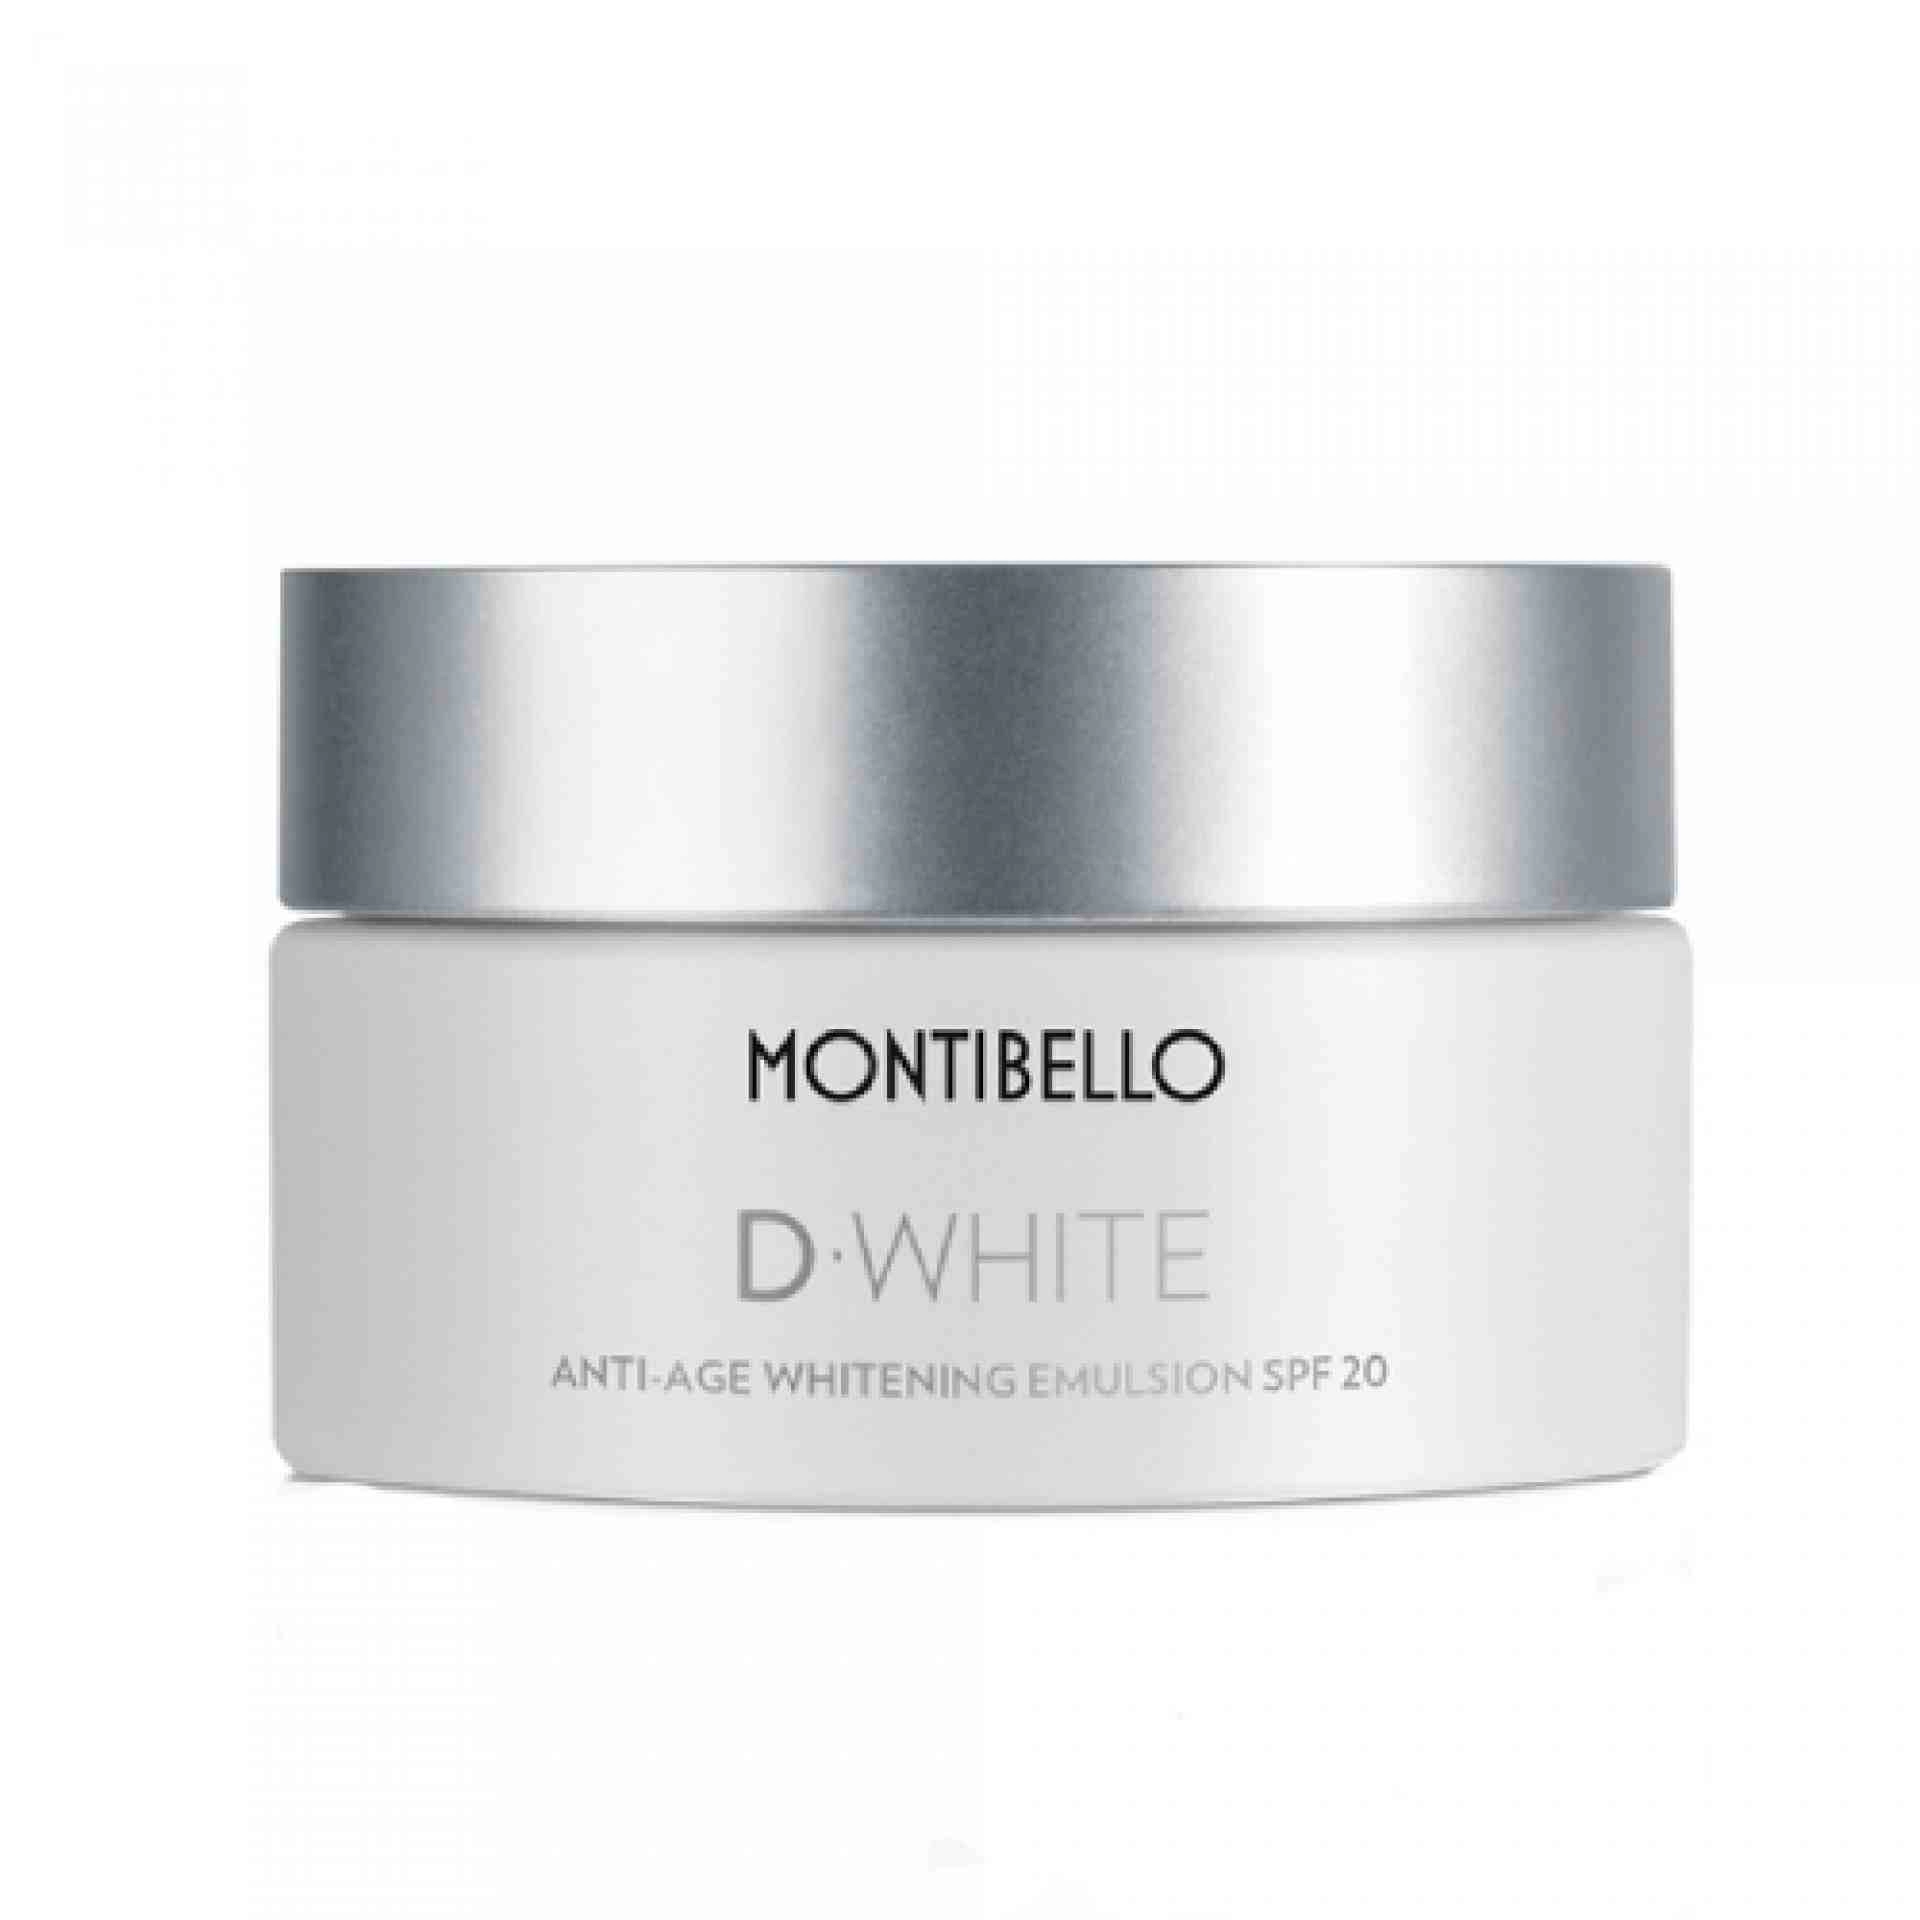 Anti-age Whitening Emulsión SPF20 | Emulsión fotoprotectora y blanqueante 50 ml - D-White - Montibello ®